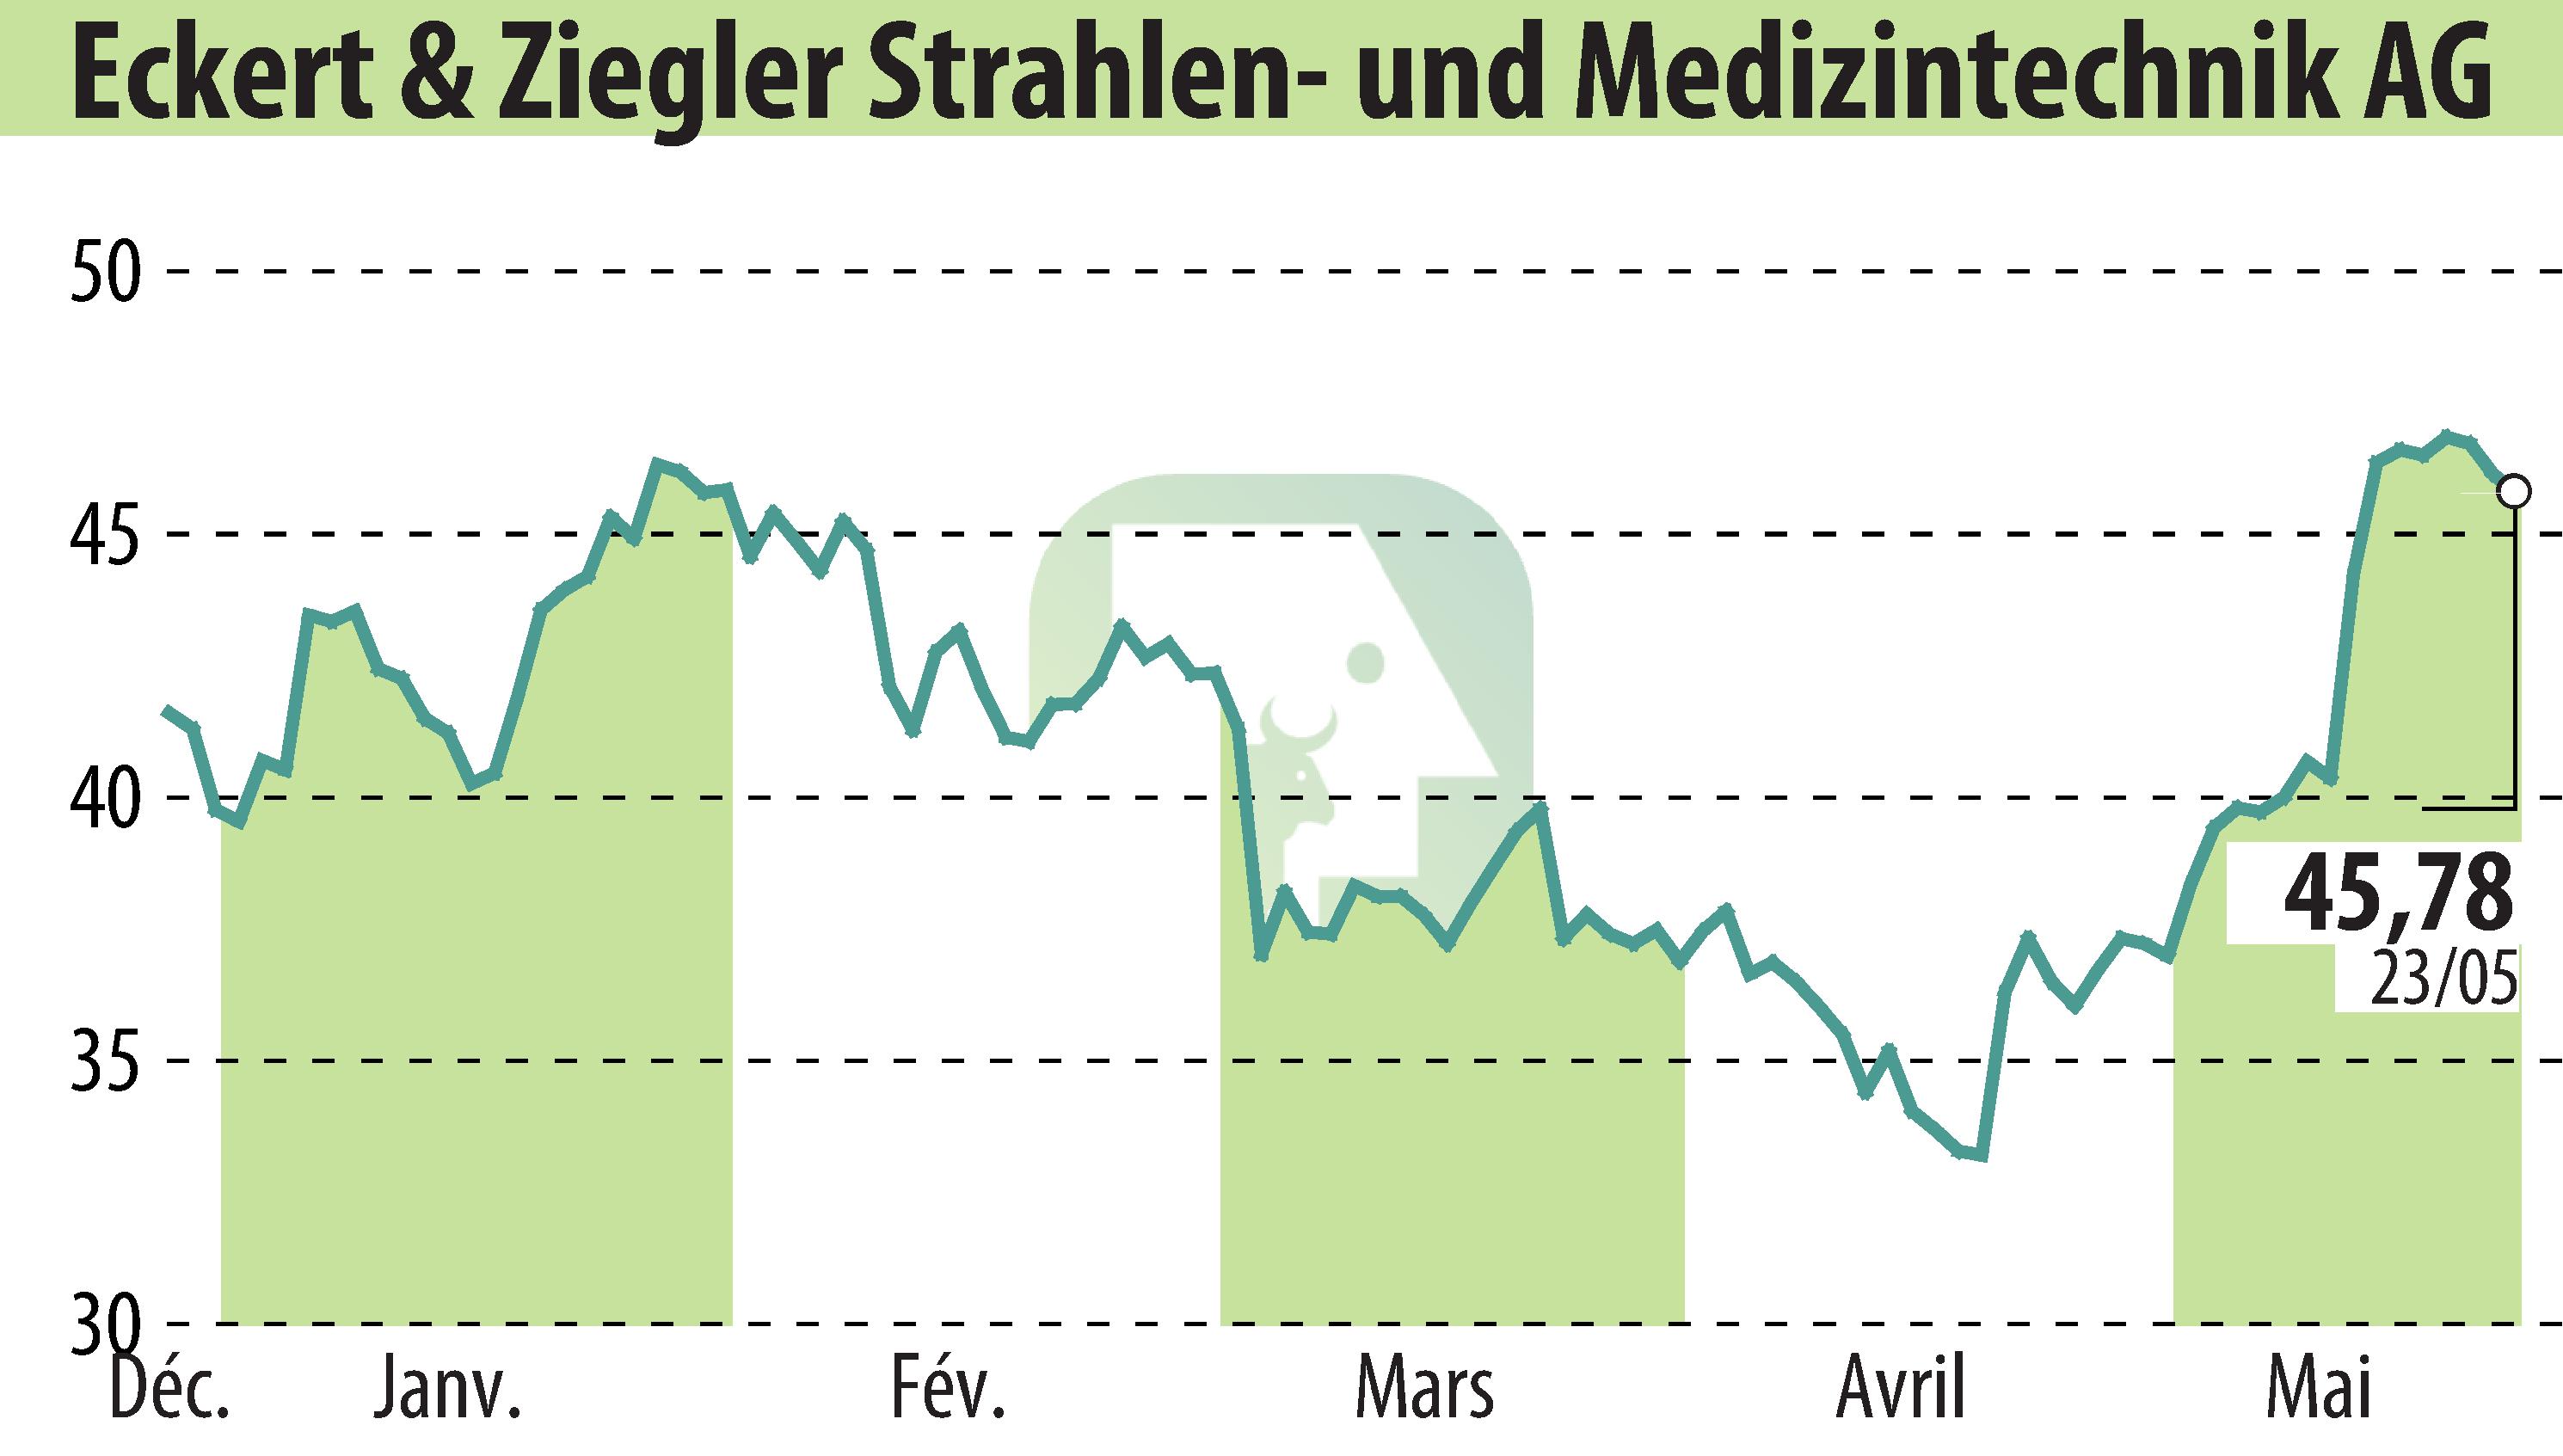 Stock price chart of Eckert & Ziegler Strahlen- Und Medizintechnik AG (EBR:EUZ) showing fluctuations.